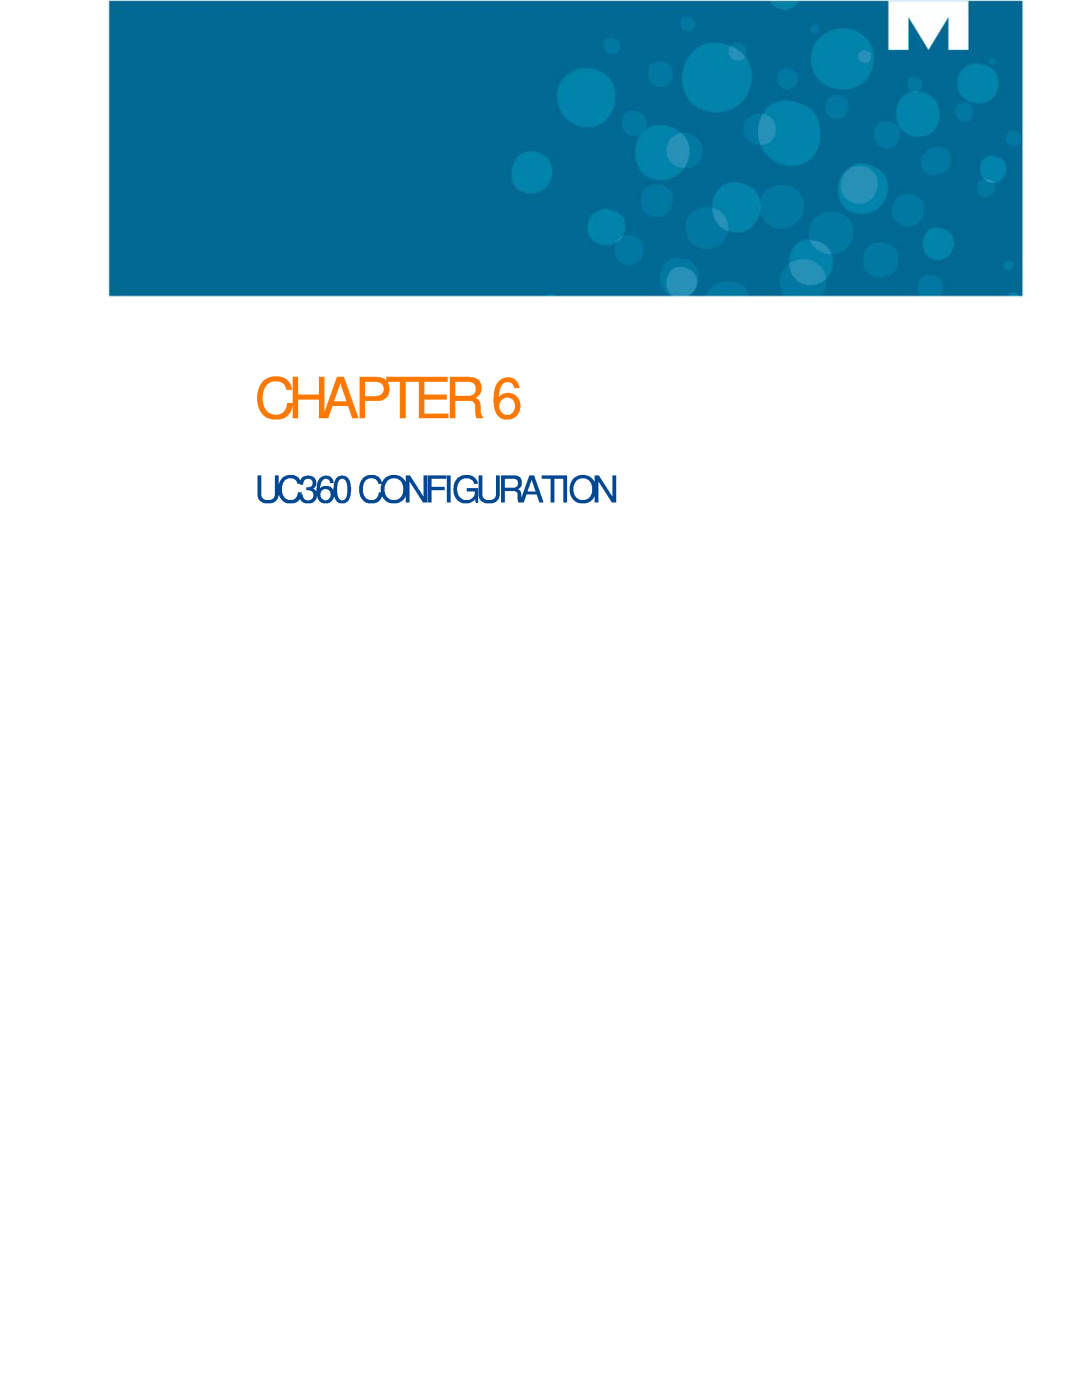 Mitel manual UC360 CONFIGURATION, Chapter 